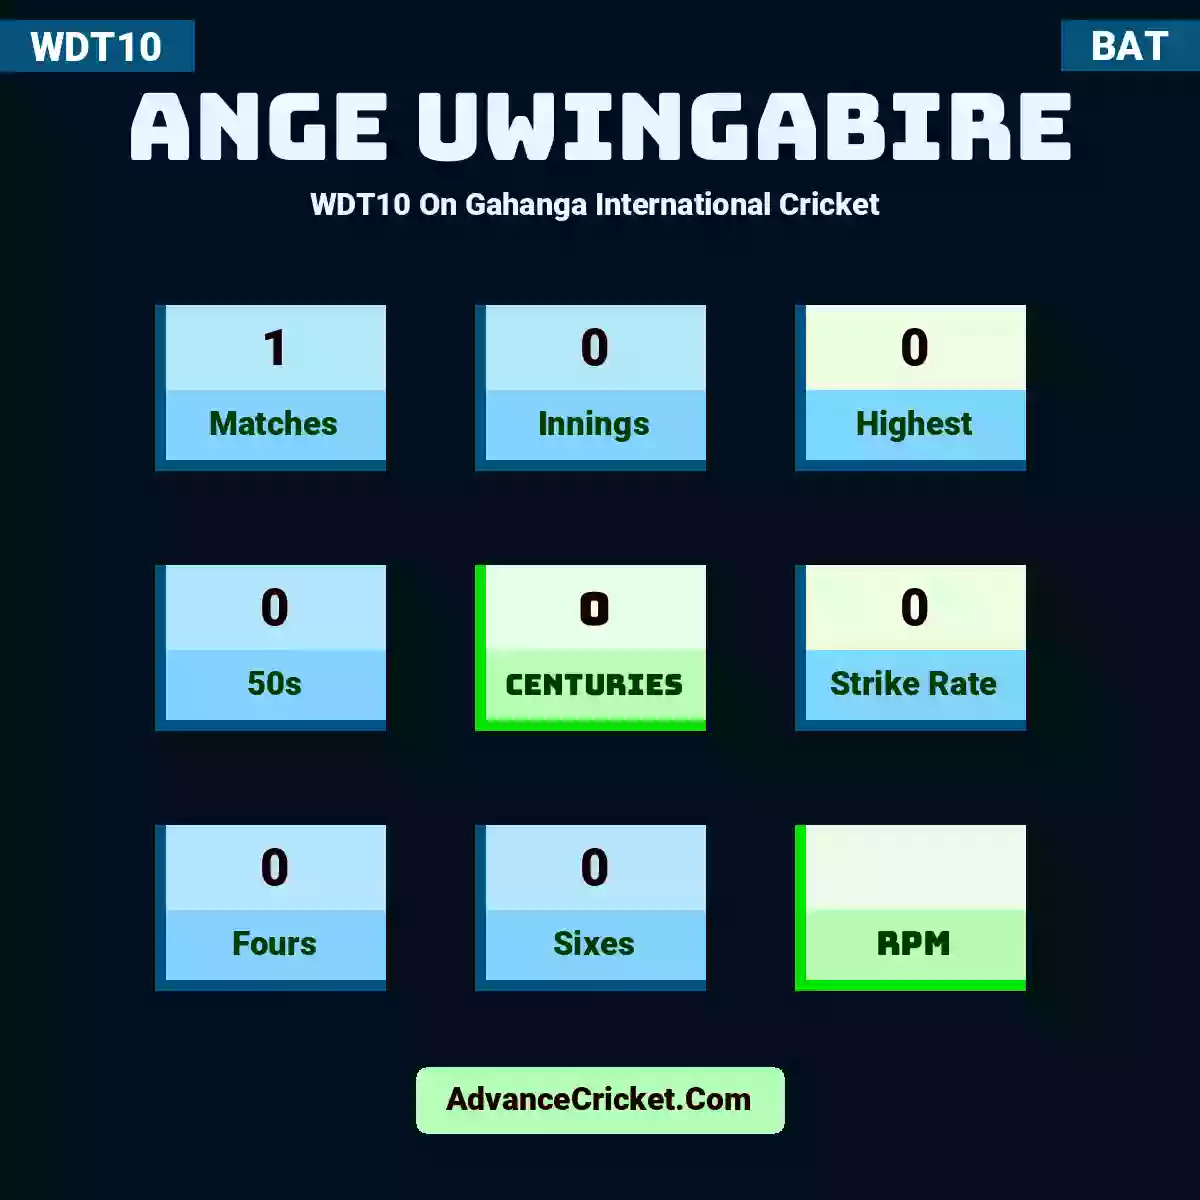 Ange Uwingabire WDT10  On Gahanga International Cricket , Ange Uwingabire played 1 matches, scored 0 runs as highest, 0 half-centuries, and 0 centuries, with a strike rate of 0. A.Uwingabire hit 0 fours and 0 sixes.